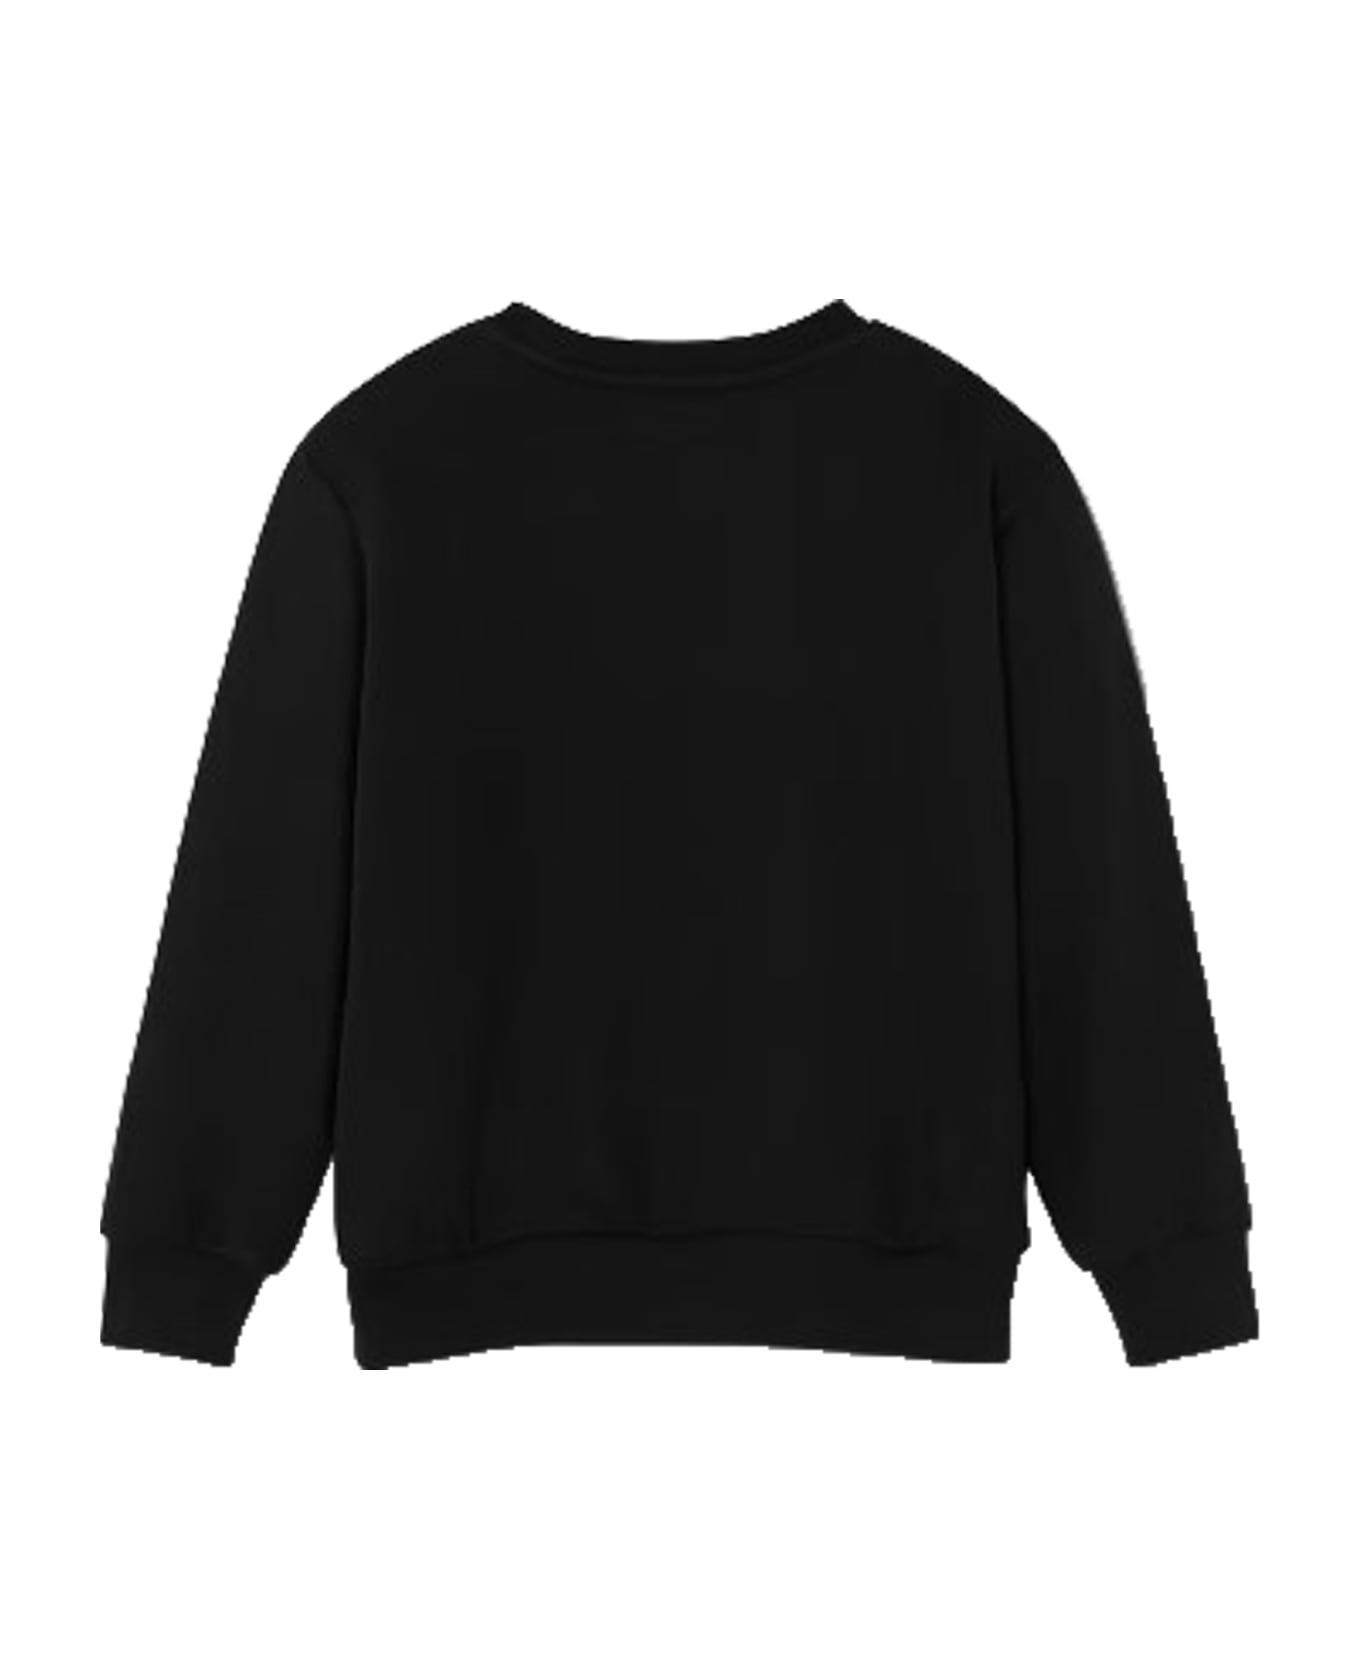 Versace Sweatshirt - Back